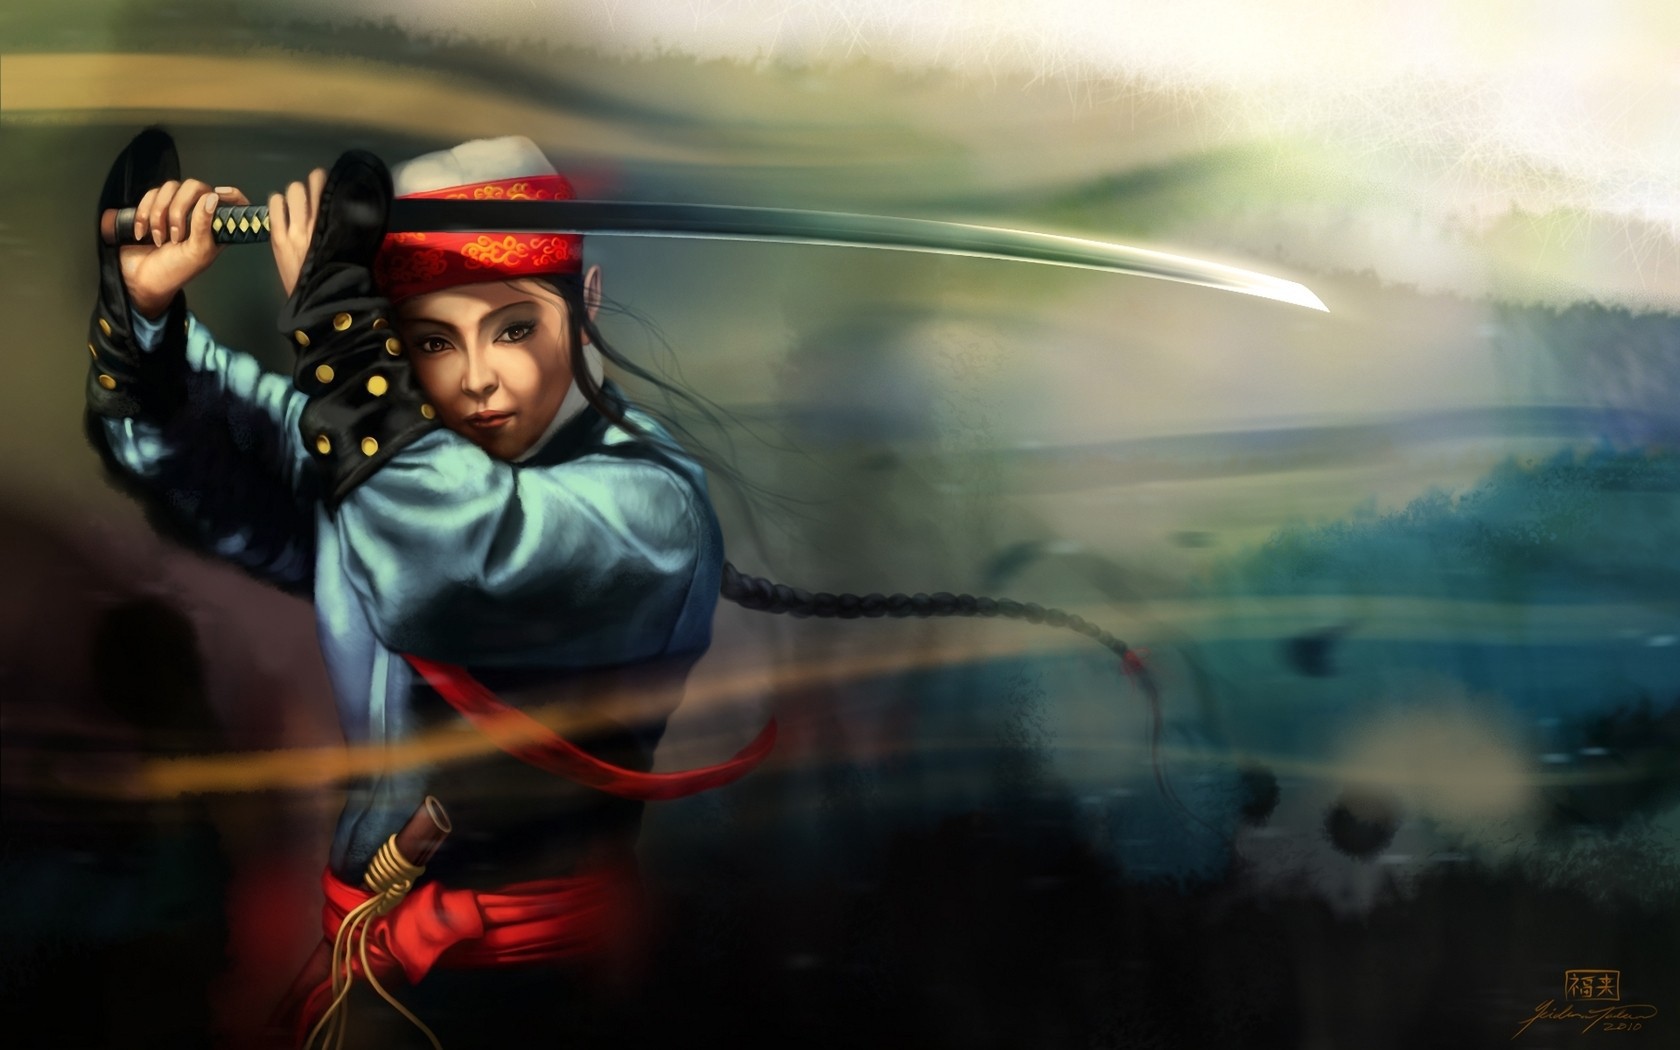 General 1680x1050 fantasy art sword fantasy girl women Asian katana women with swords weapon dark hair long hair